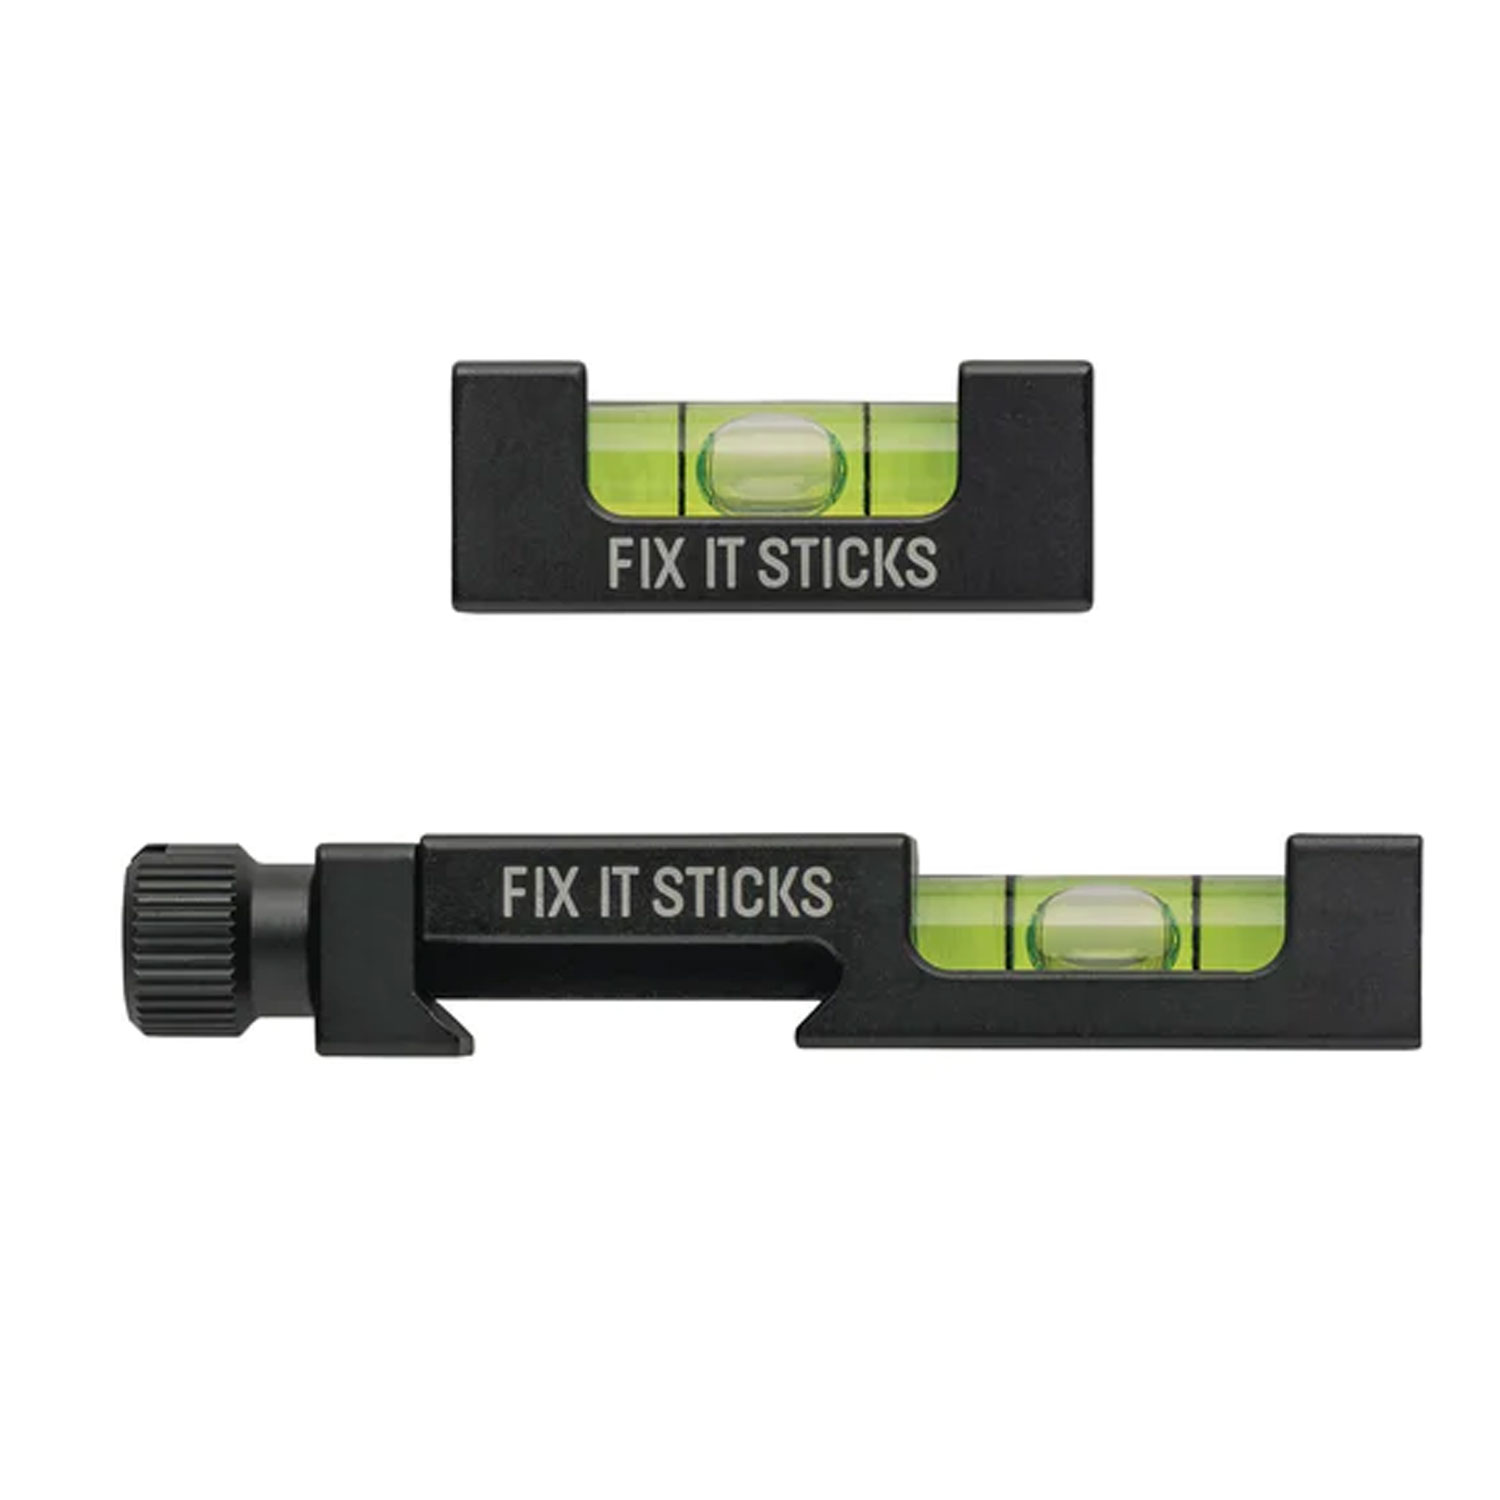 Fix It Sticks Handgun and Optics Toolkit: MGW